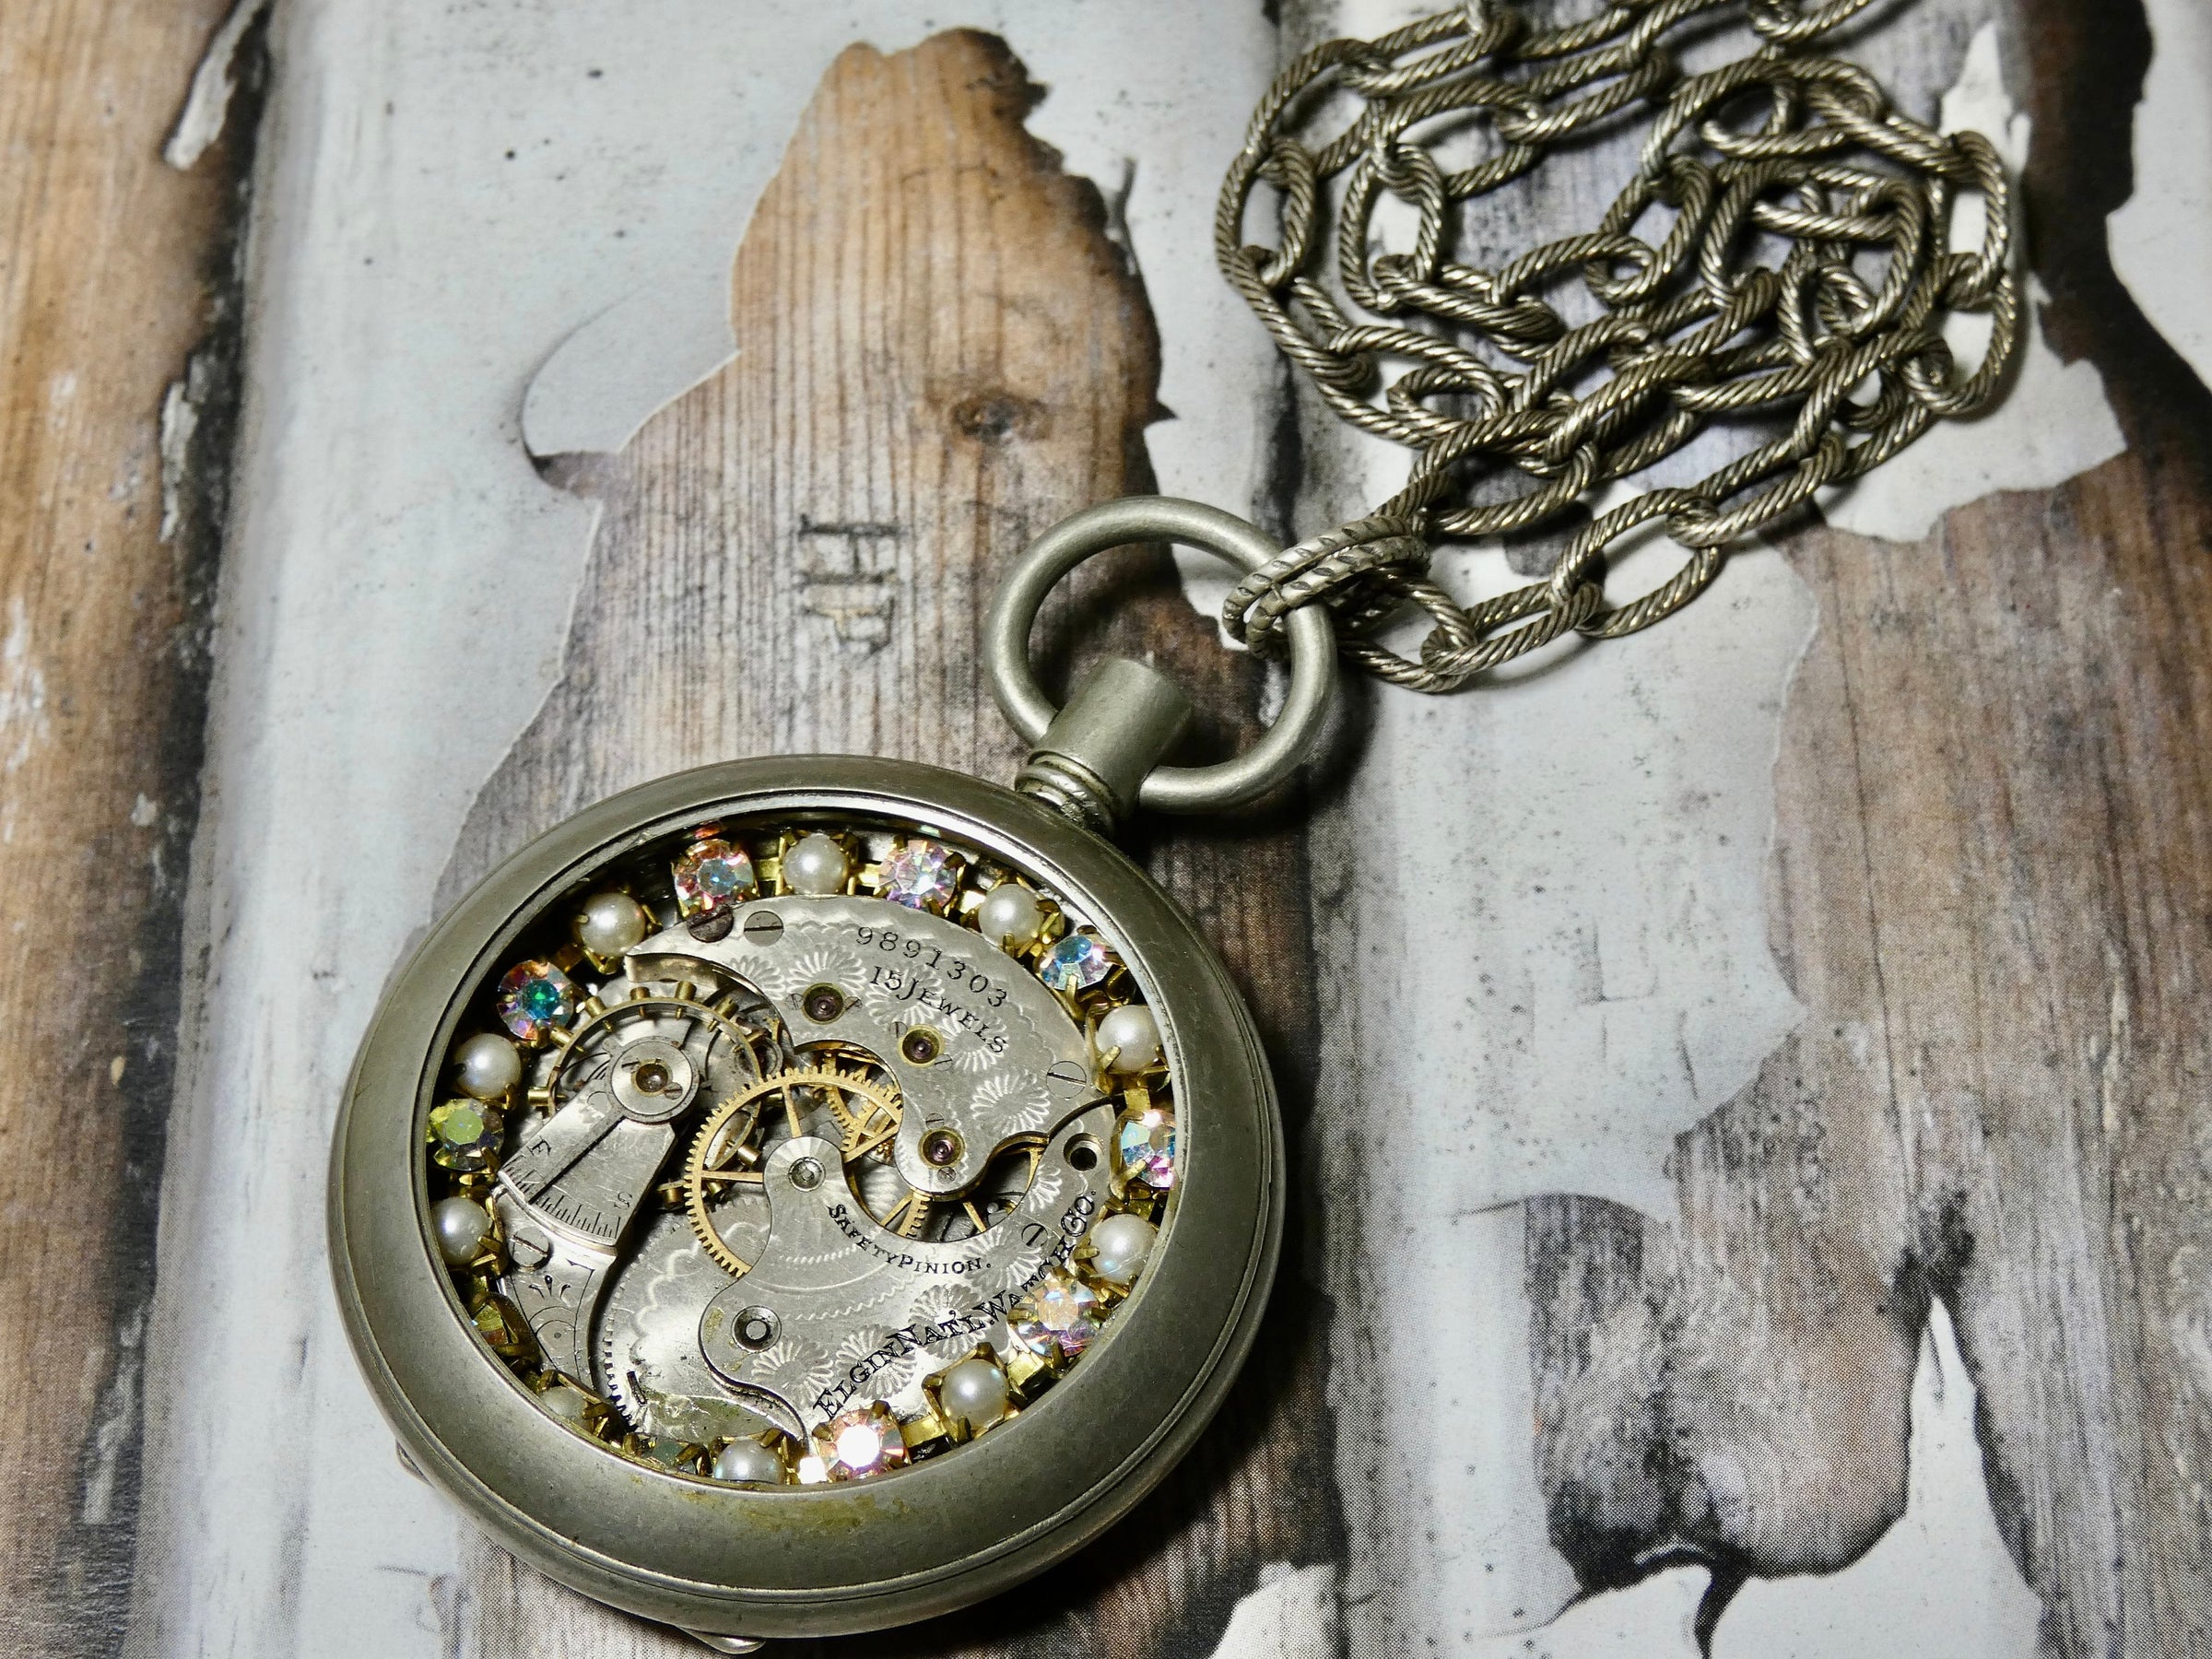 Steampunk altered pocket watch gear necklace